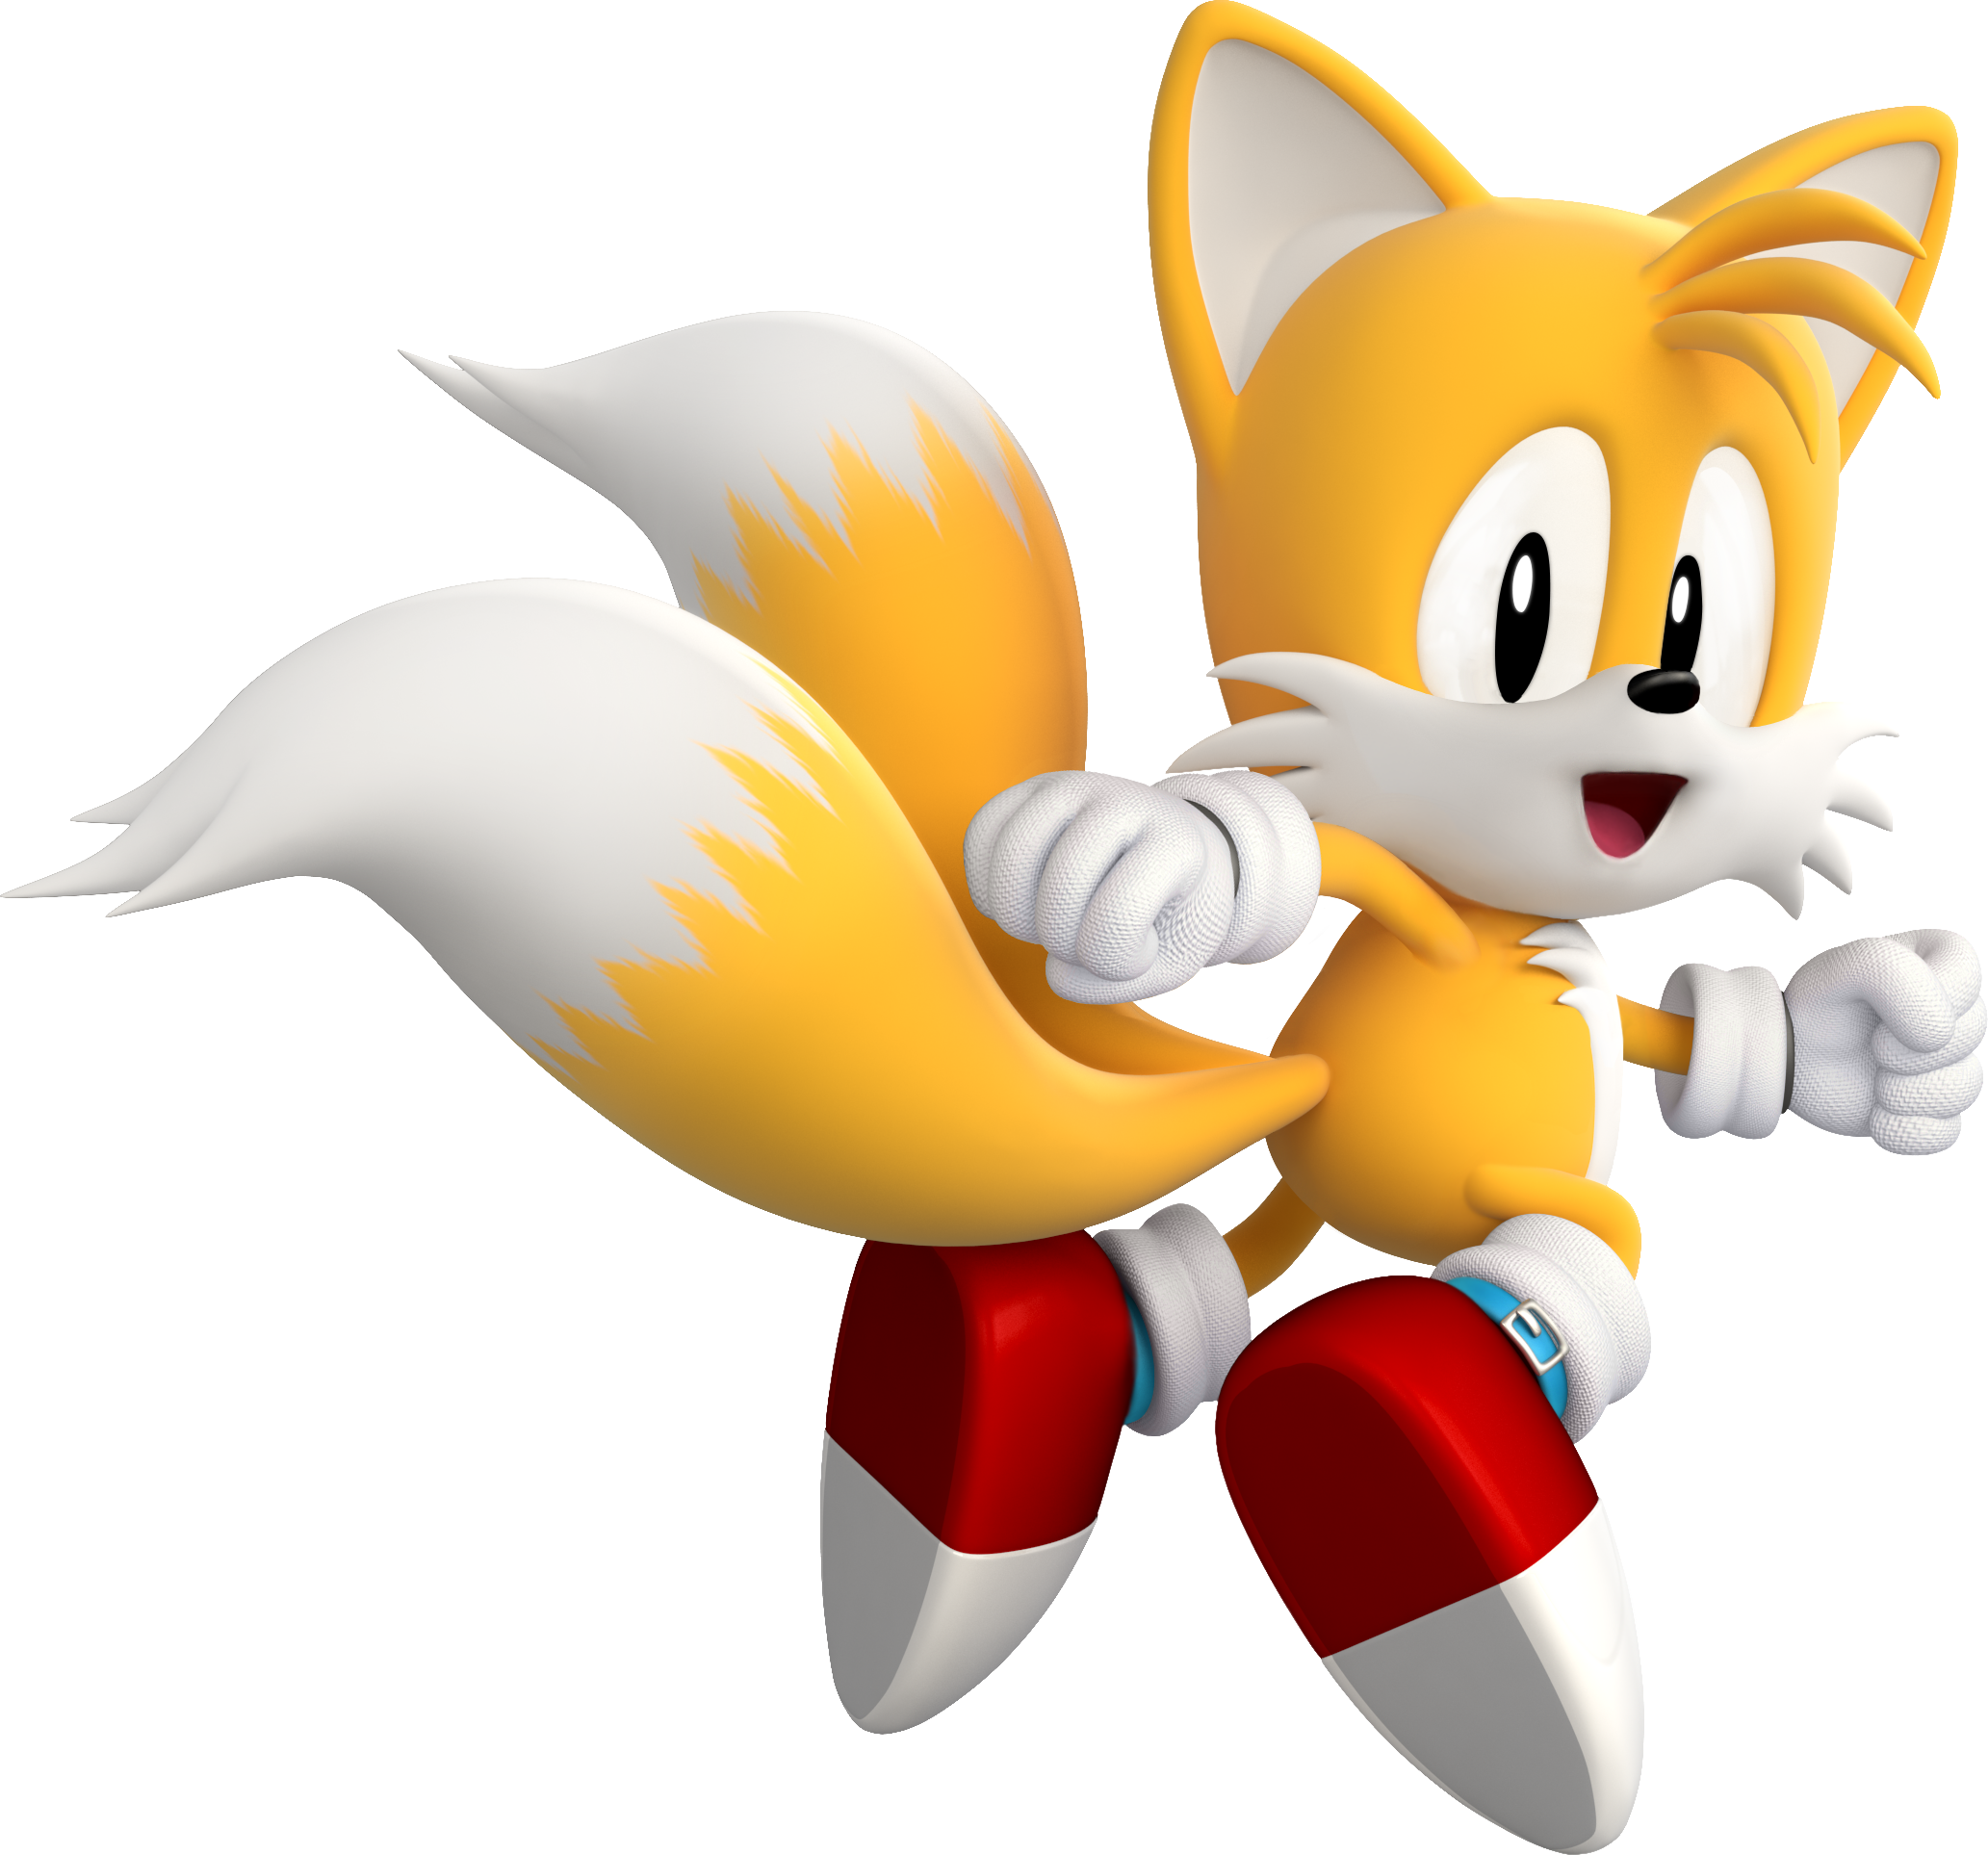 Classic Tails  Sonic, Sonic the hedgehog, Hedgehog